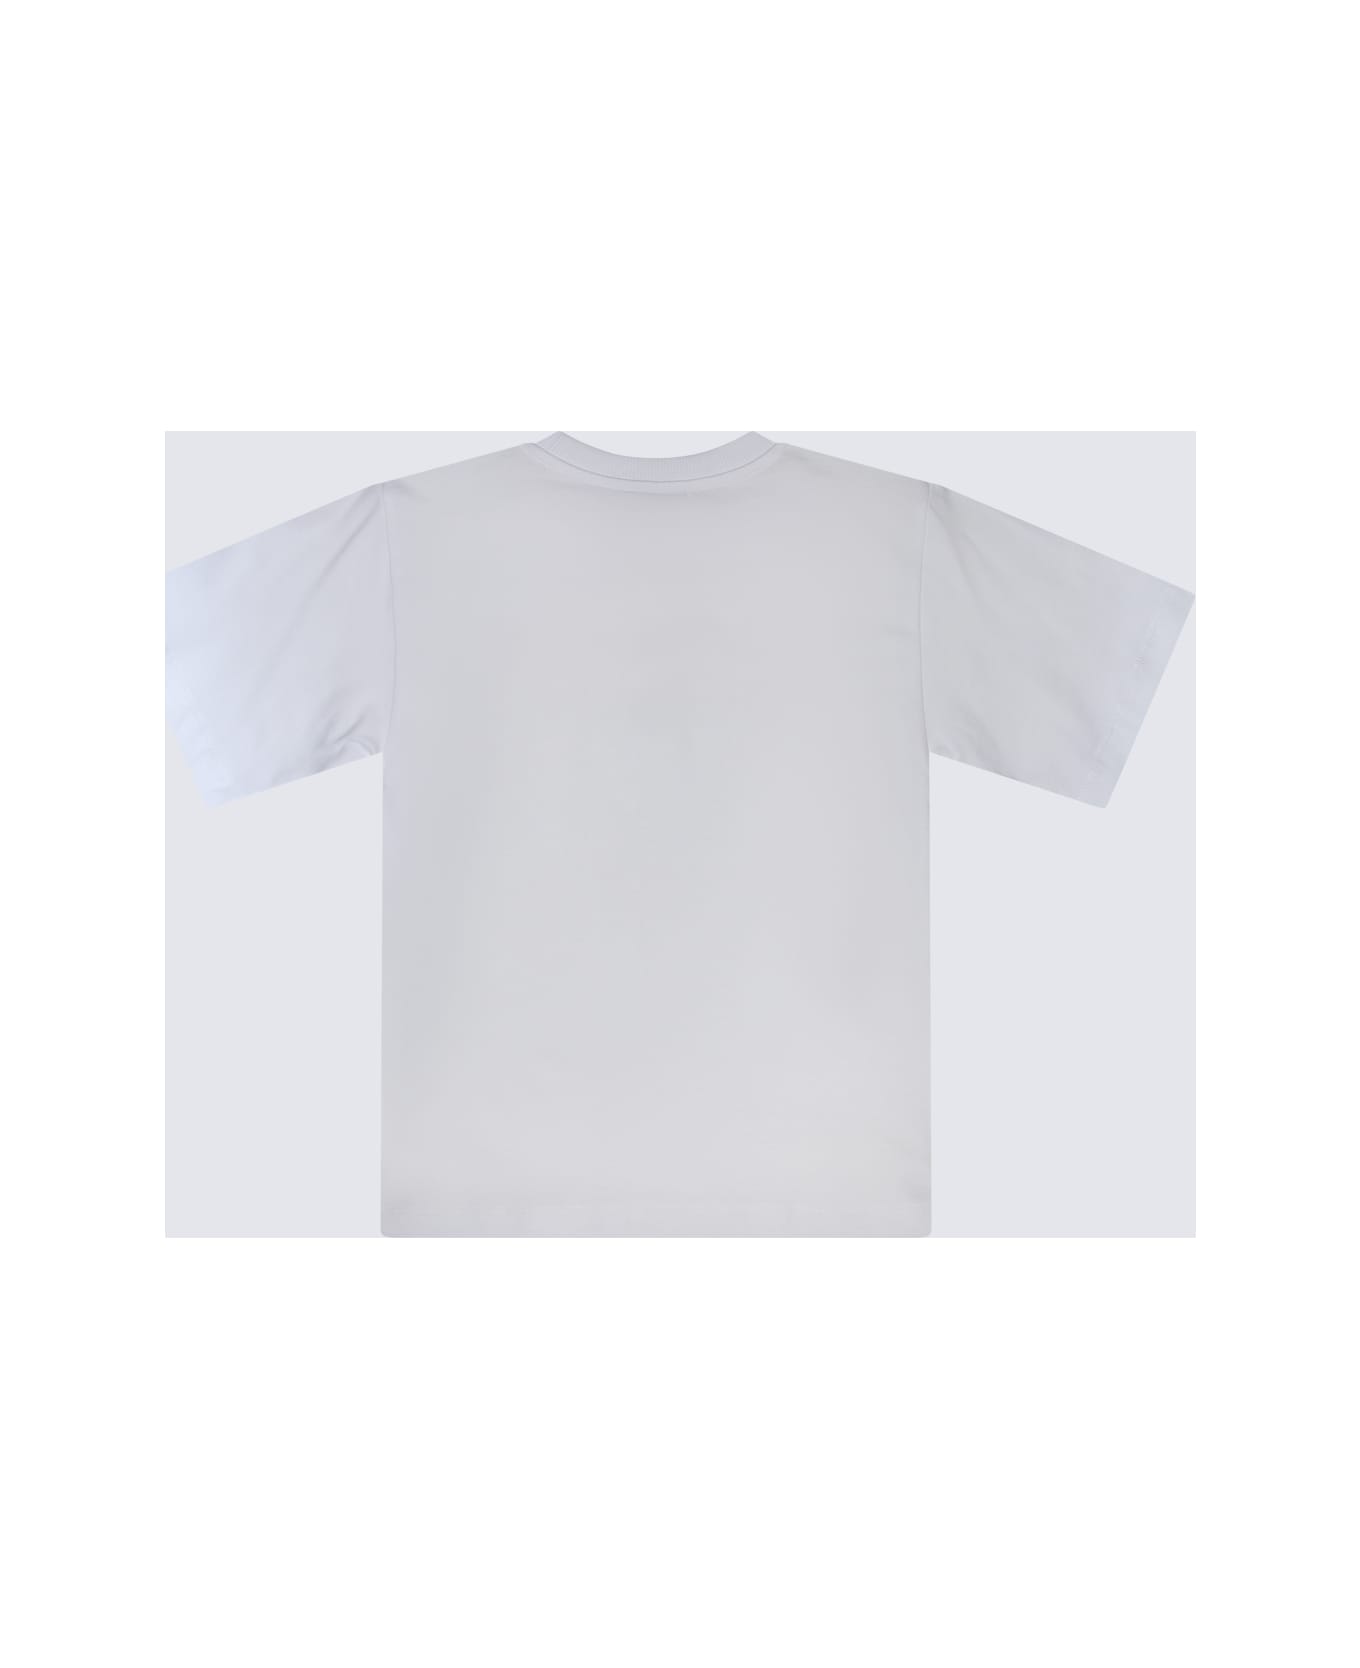 Moschino White Cotton Teddy Bear T-shirt - WHITE